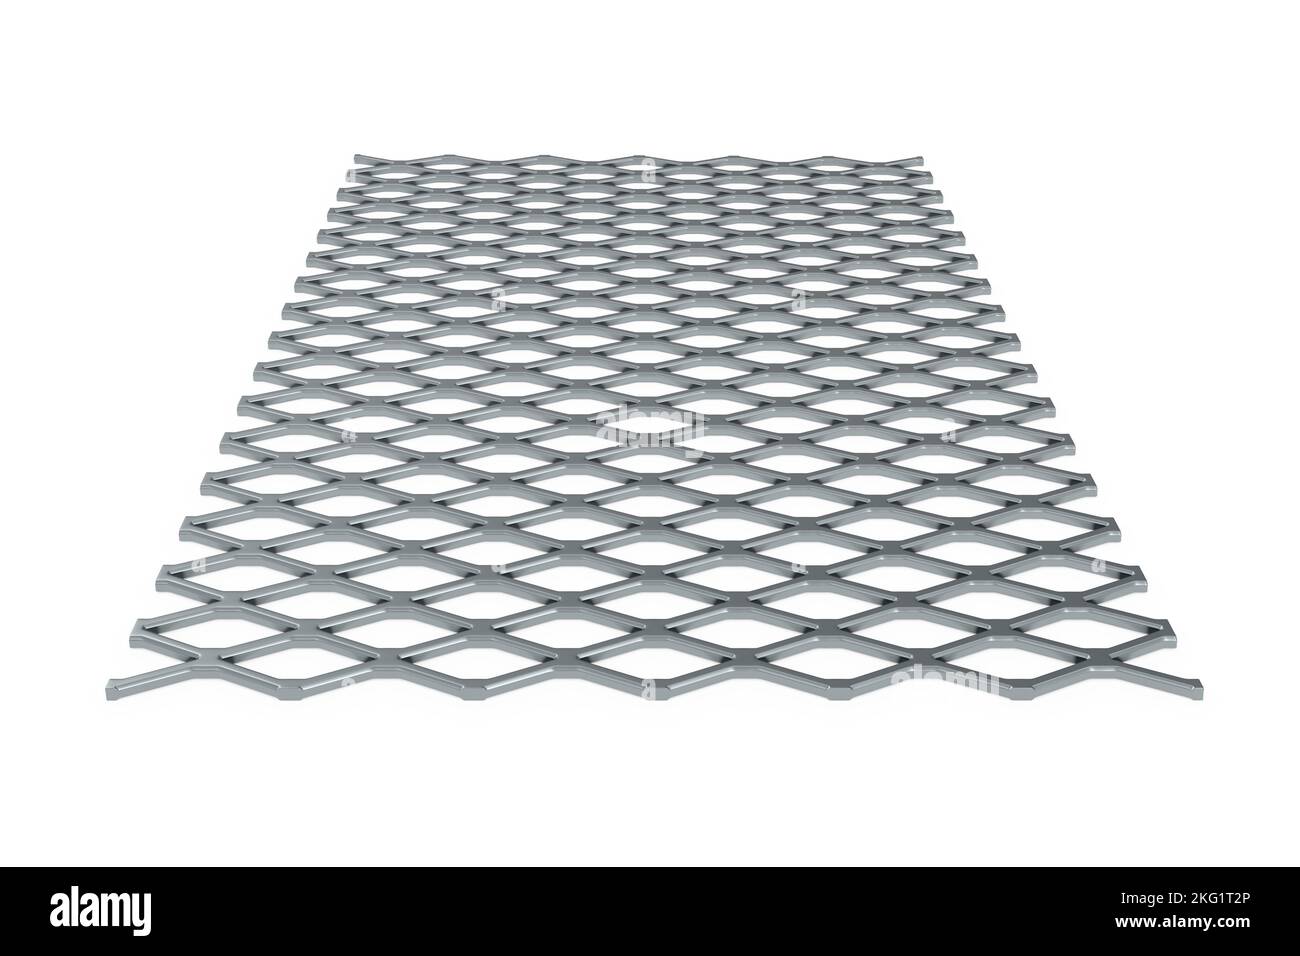 Lamiera d'acciaio espansa appiattita isolata su fondo bianco - rendering 3D Foto Stock